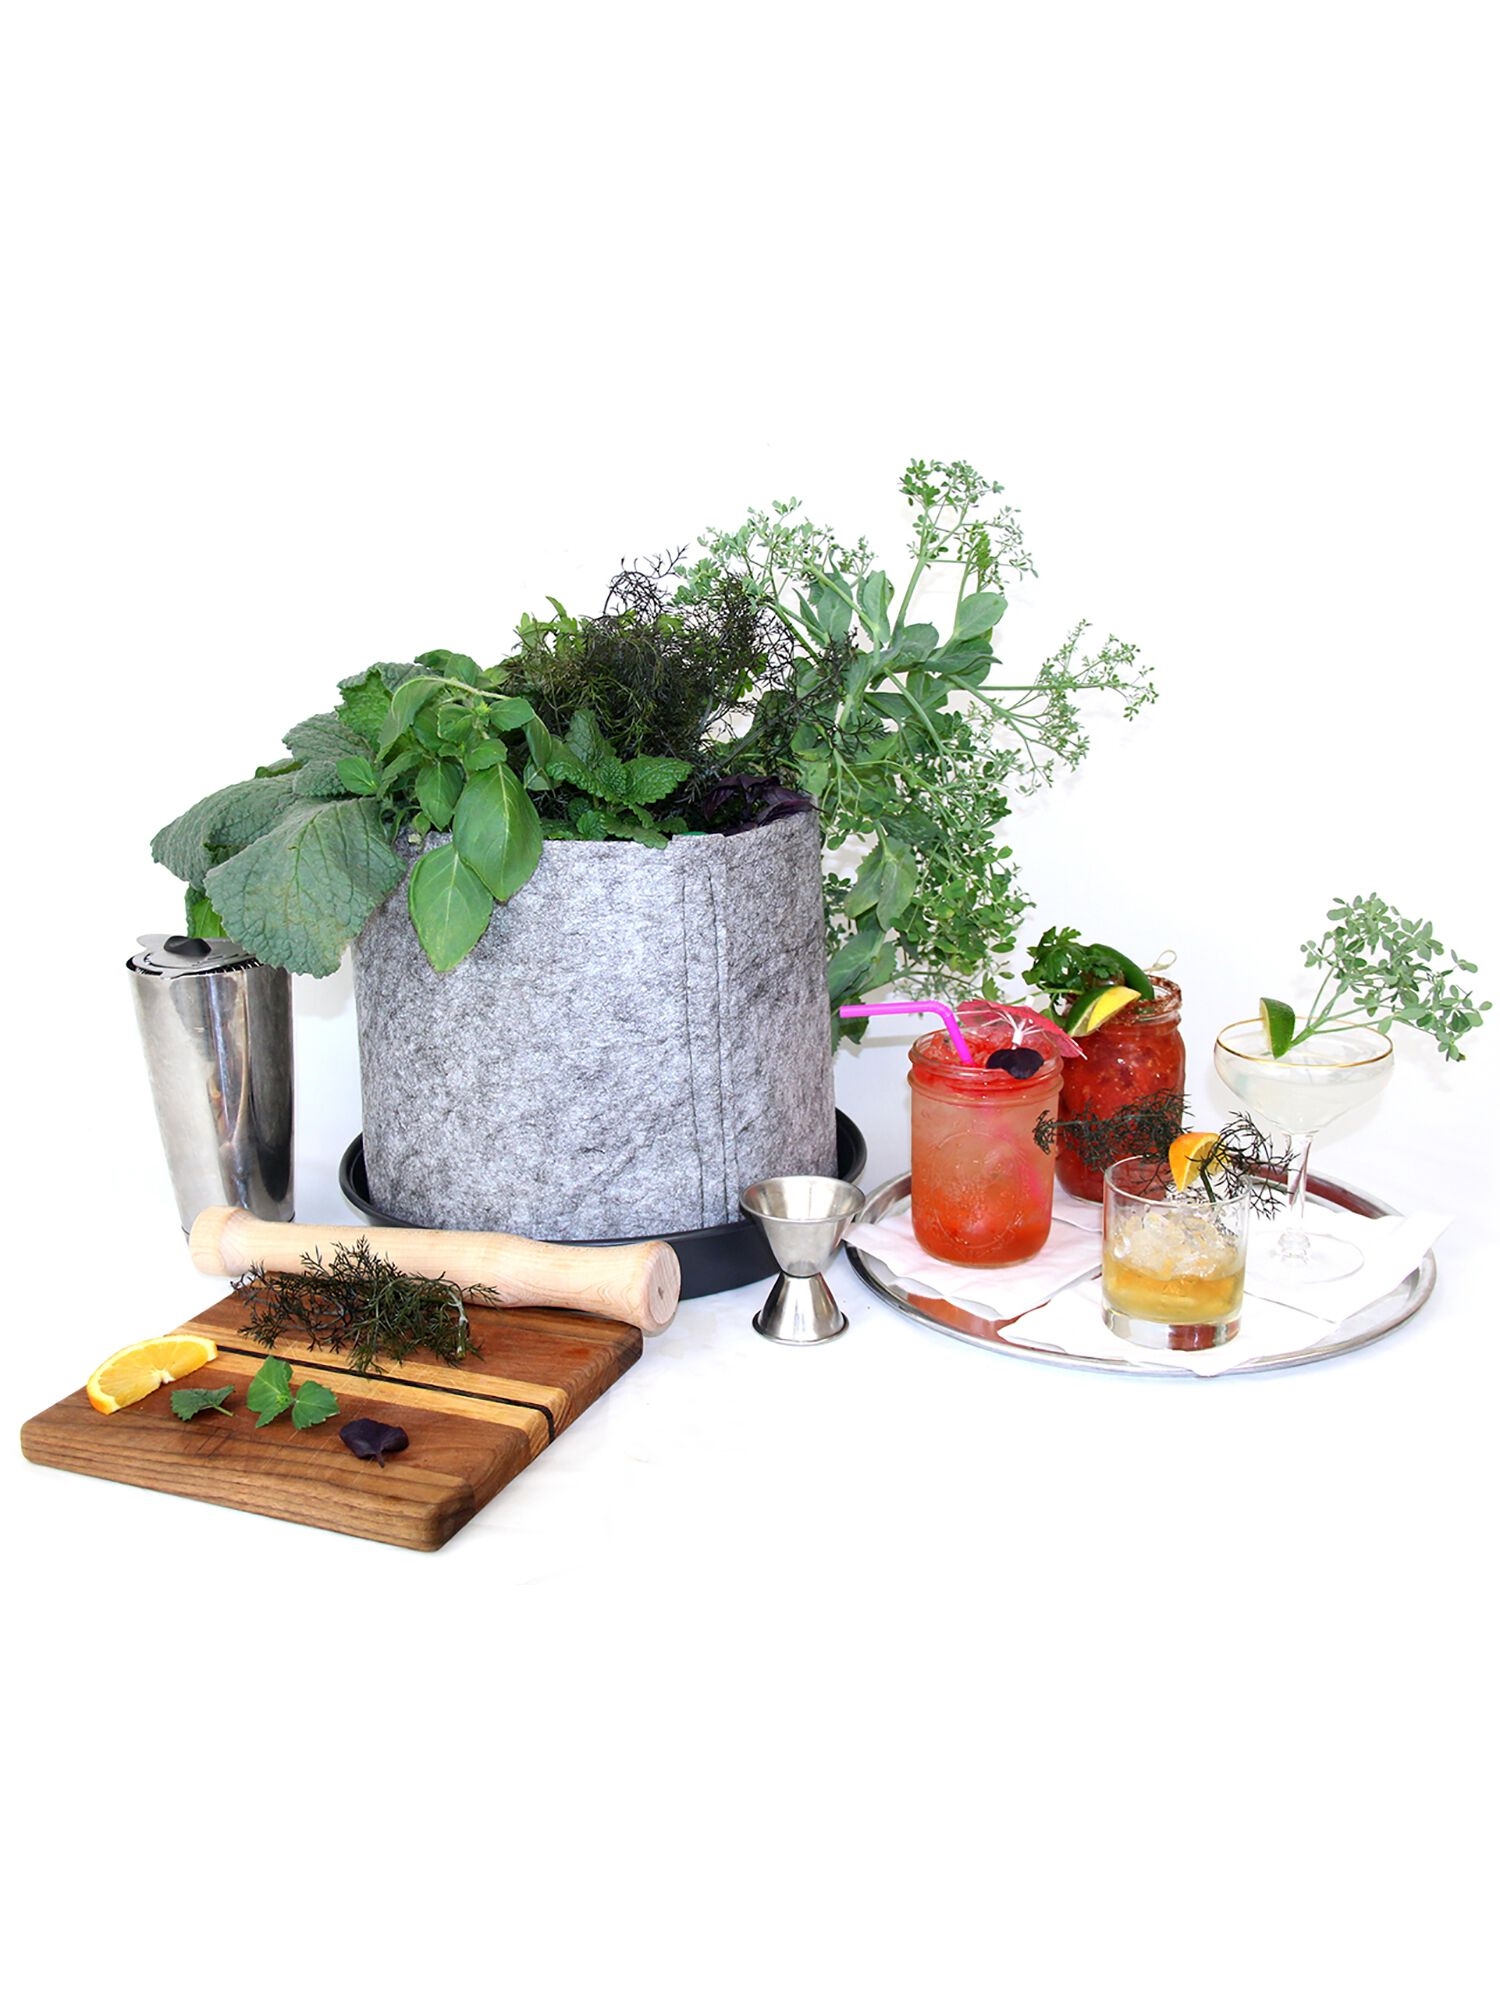 Grow Your Own Cocktails Container Garden Recipe Garden Kit Seedsheet 